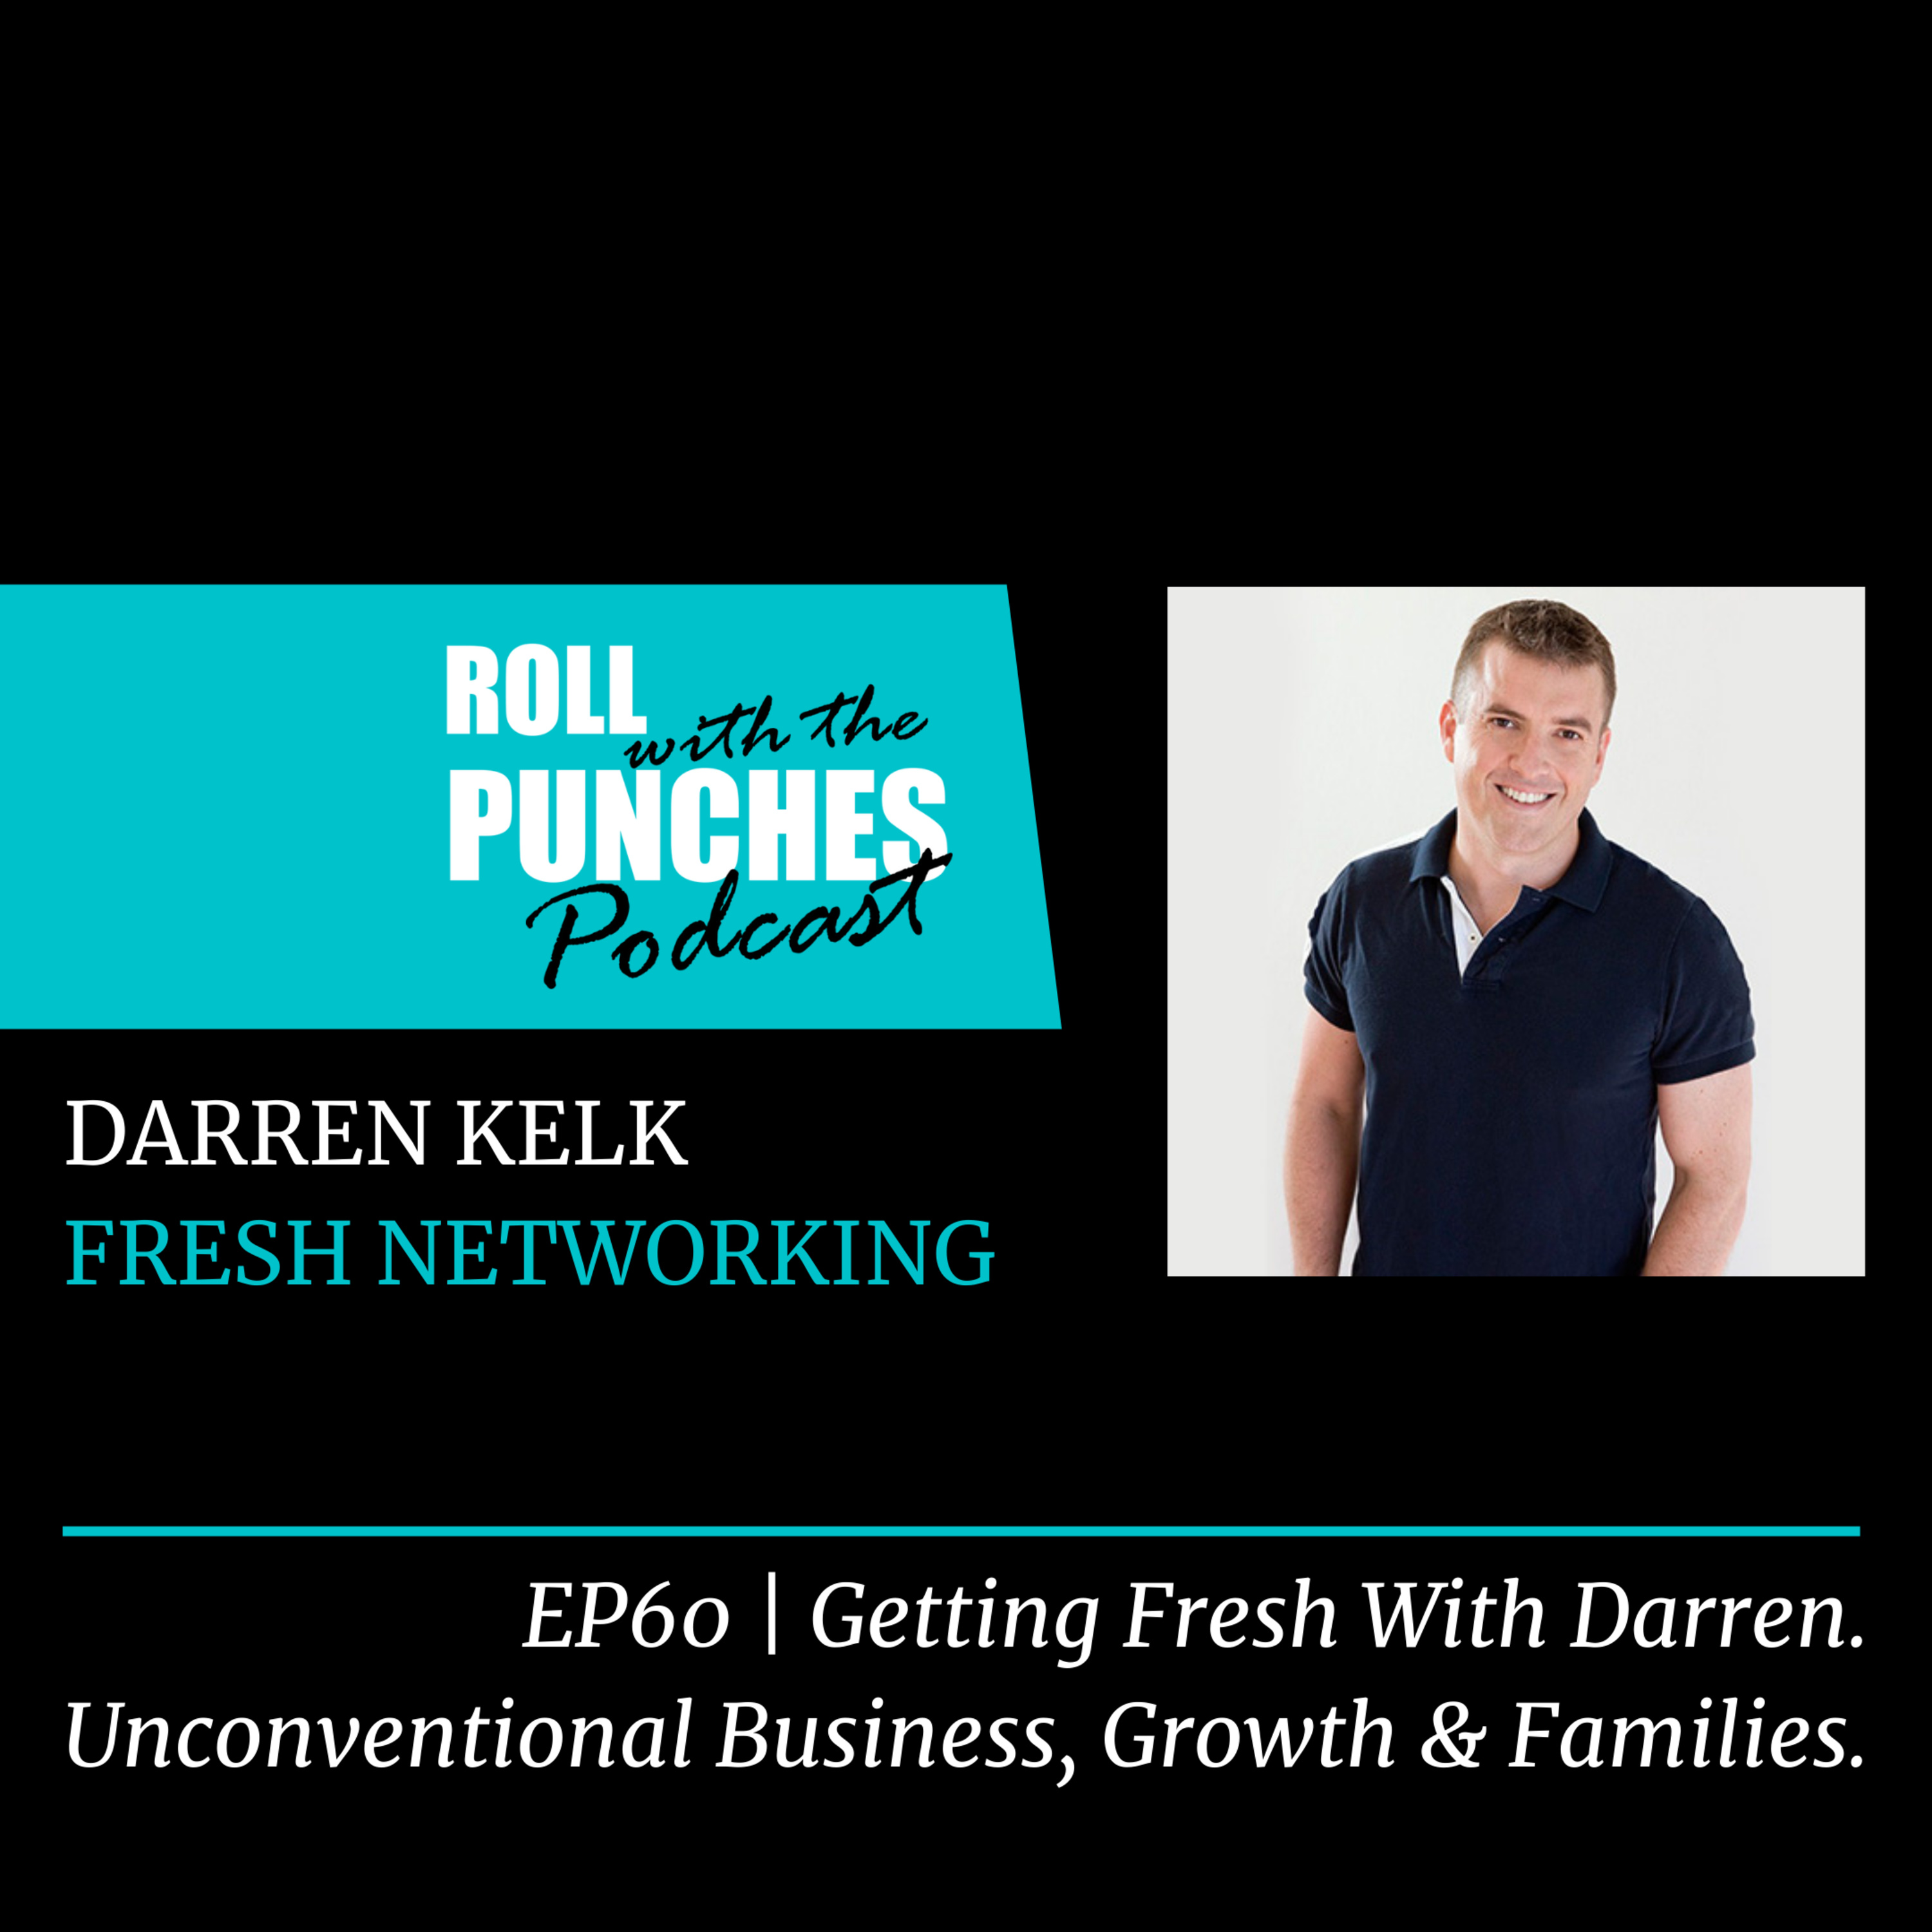 EP60 Business, Networking, Growth & Family Stuff | Darren Kelk